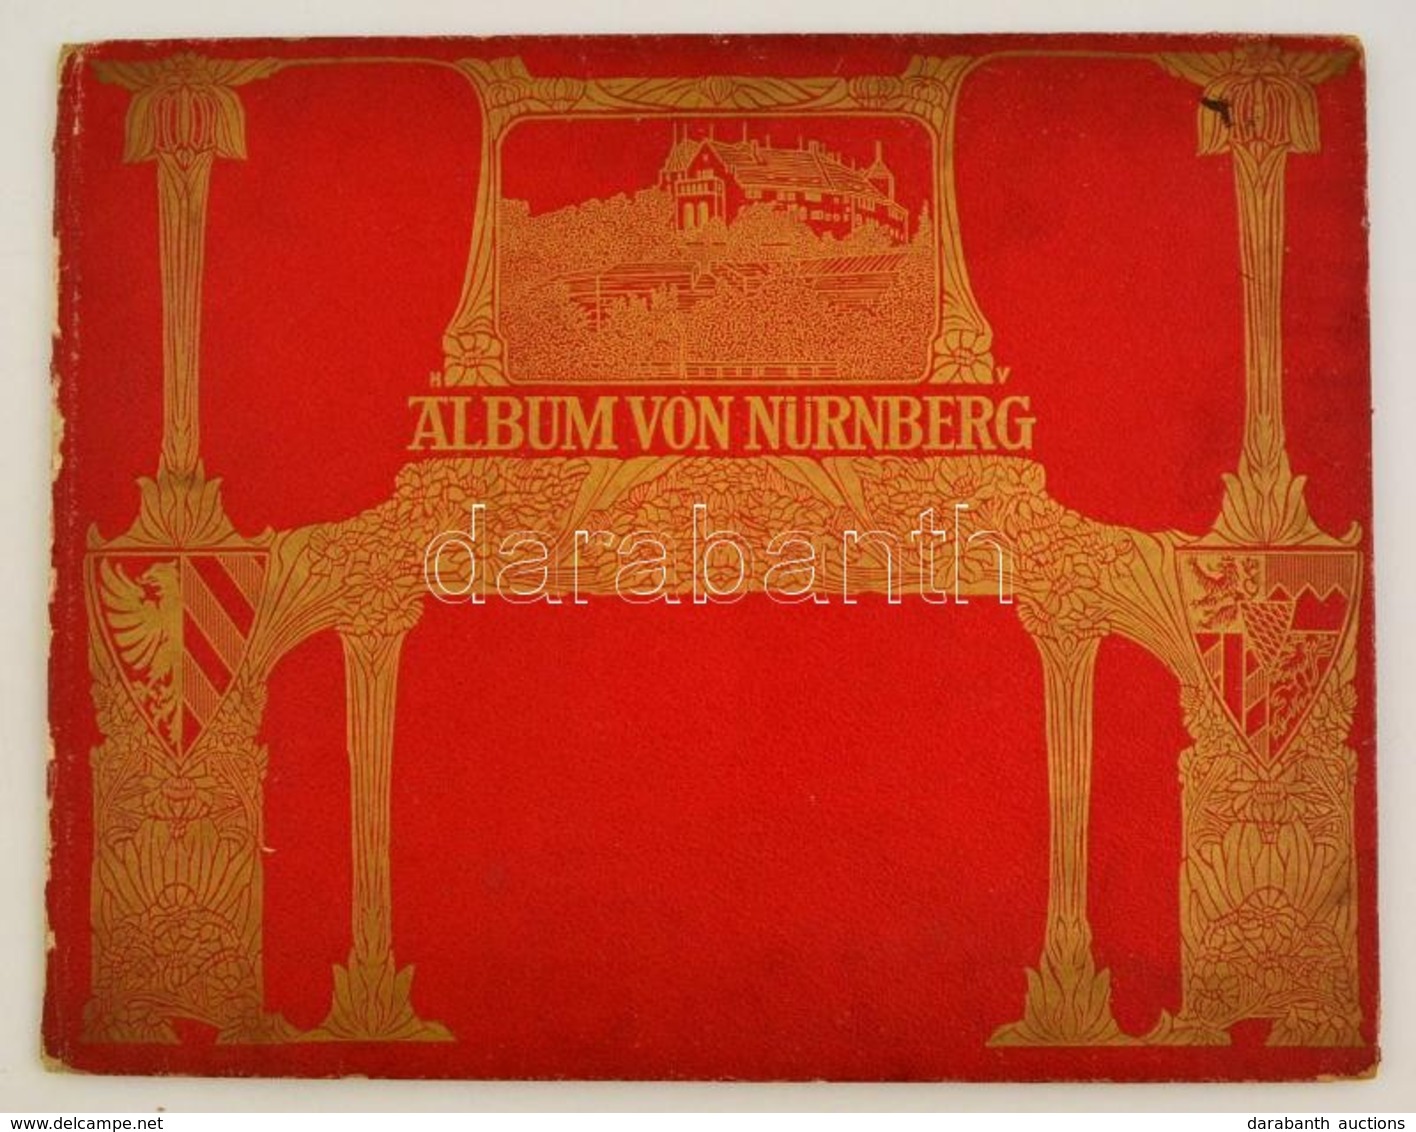 Cca 1905 Album Von Nürnberg. Berlin. Cca. 1900. Globus Verlag. 30 Képpel / With 30 Images. 35x28 Cm - Unclassified